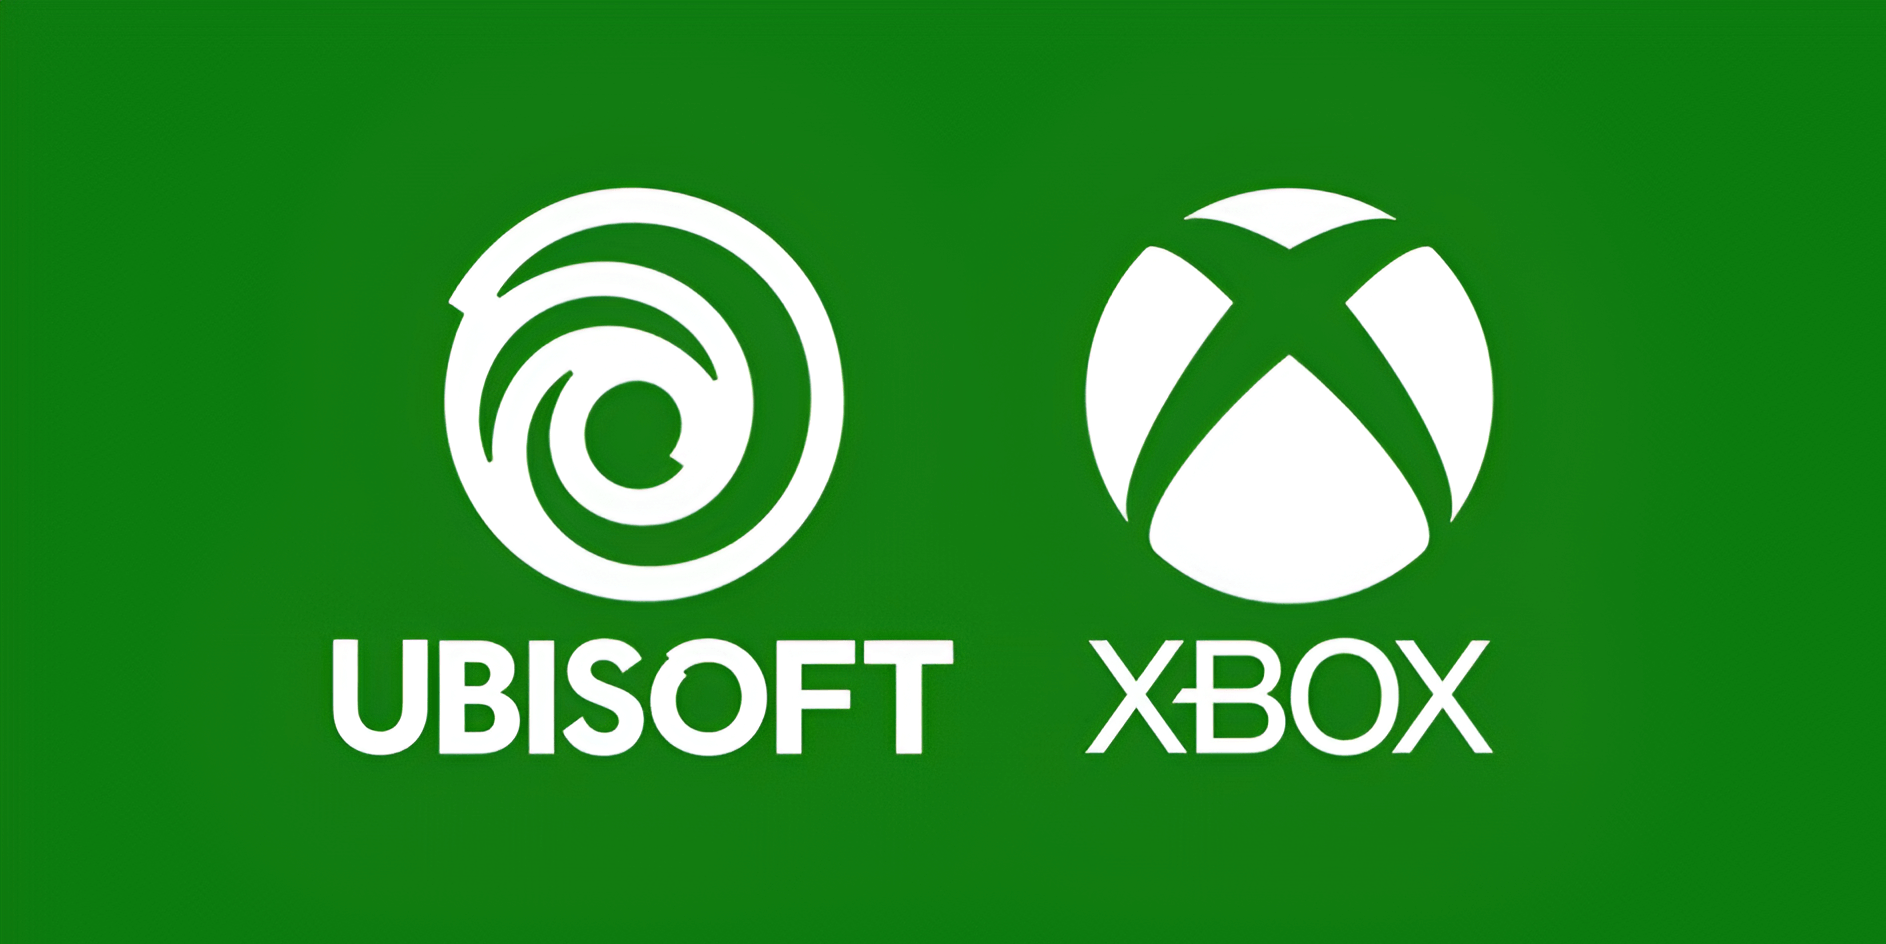 white-ubisoft-and-xbox-logos-on-dark-green-background (1)